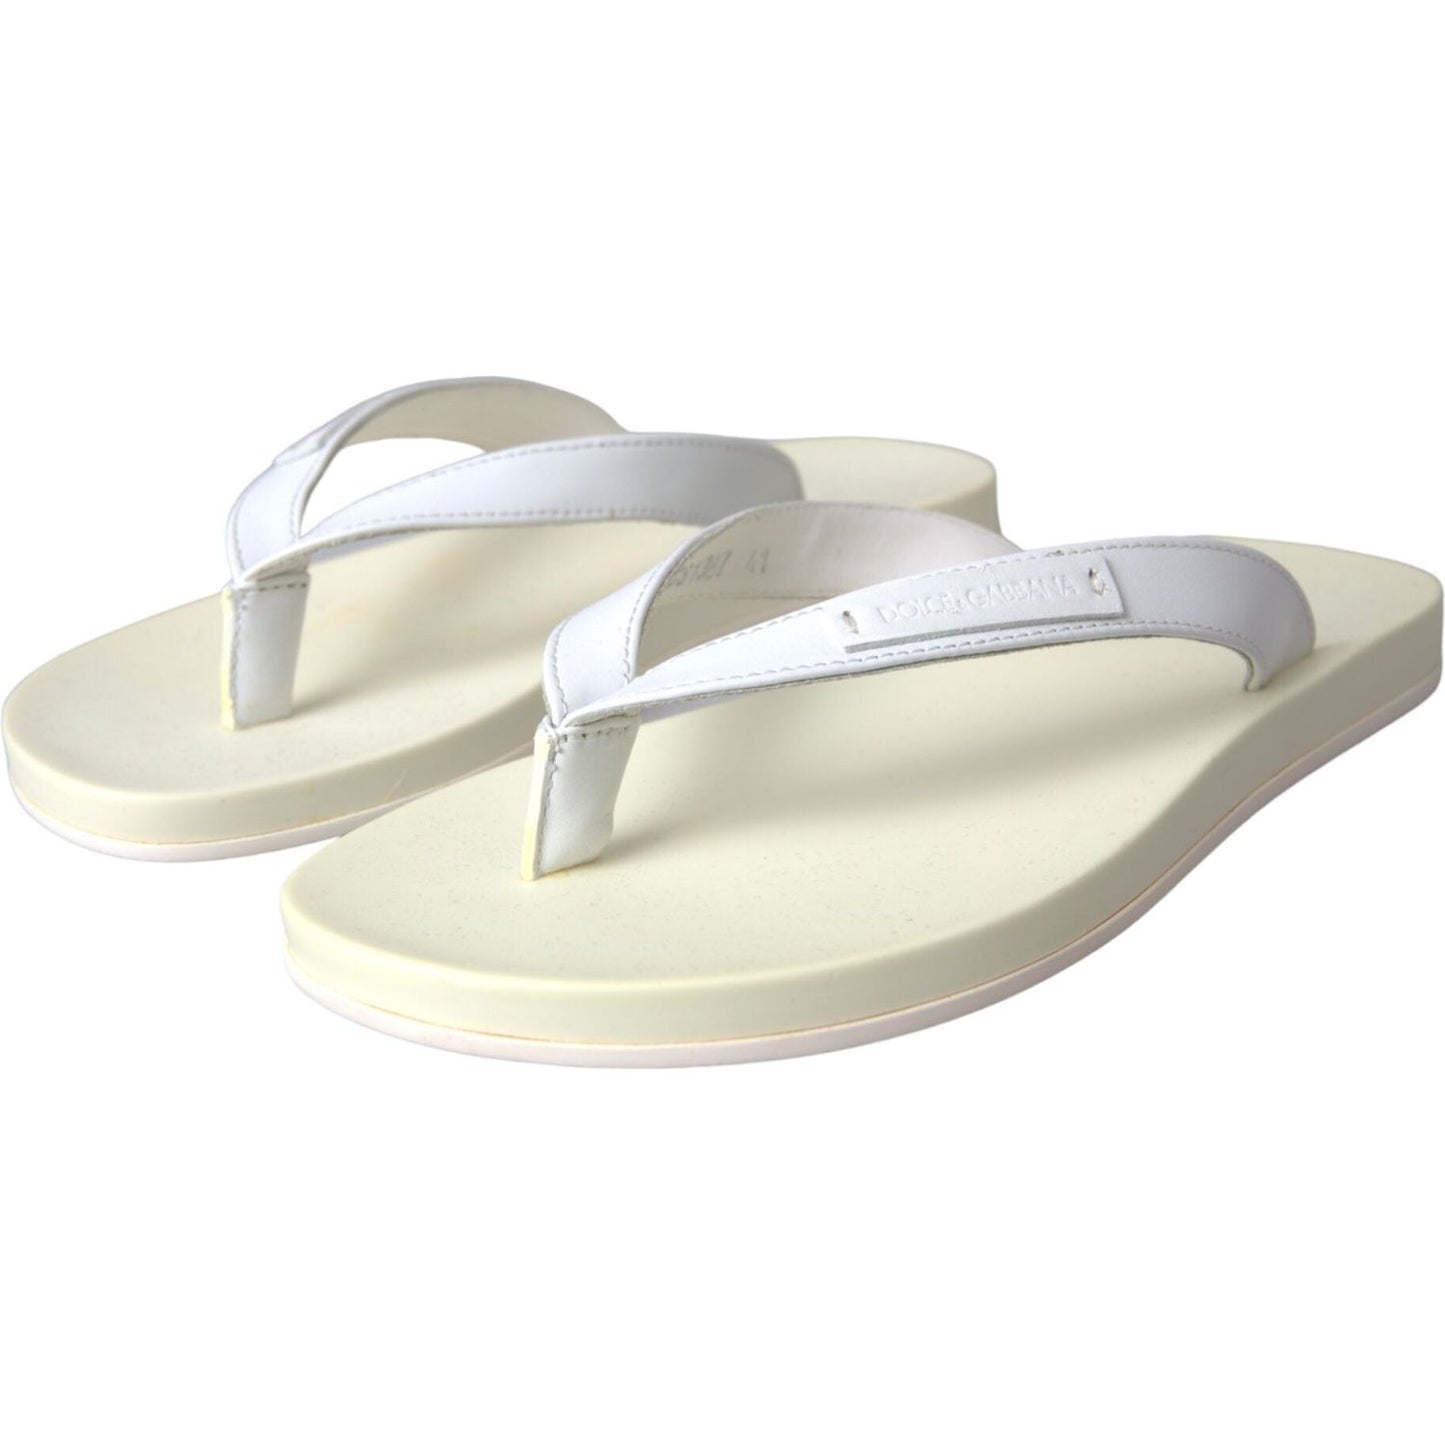 White Leather Slides Sandals Beachwear Shoes Dolce & Gabbana